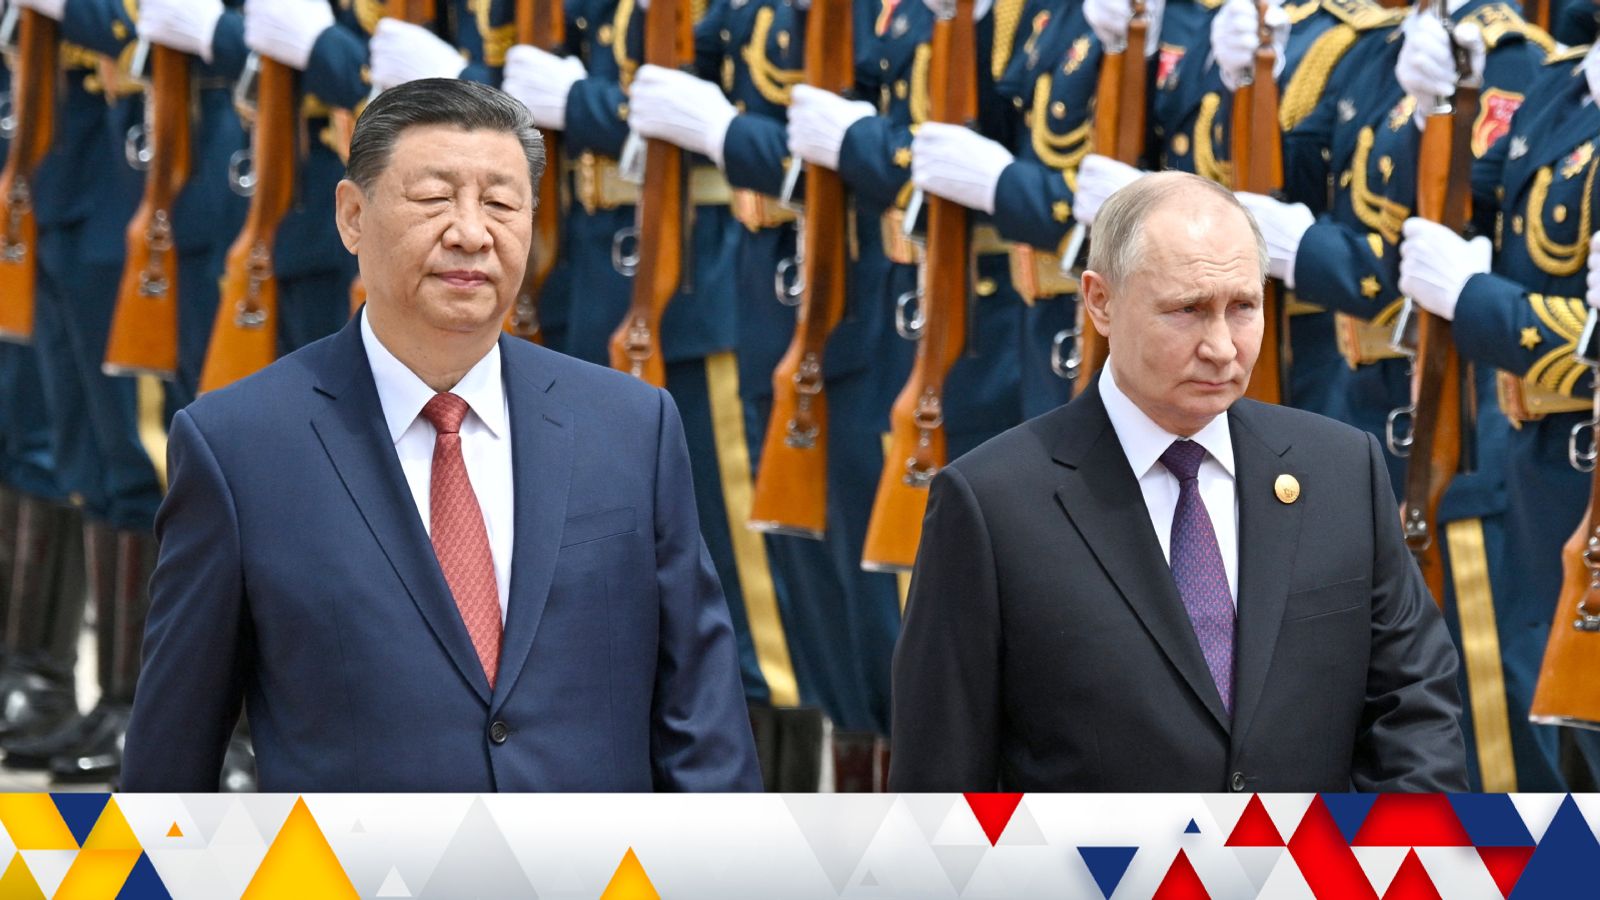 Ukraine war latest: Putin to hold talks with Xi Jinping and Erdogan tomorrow - report